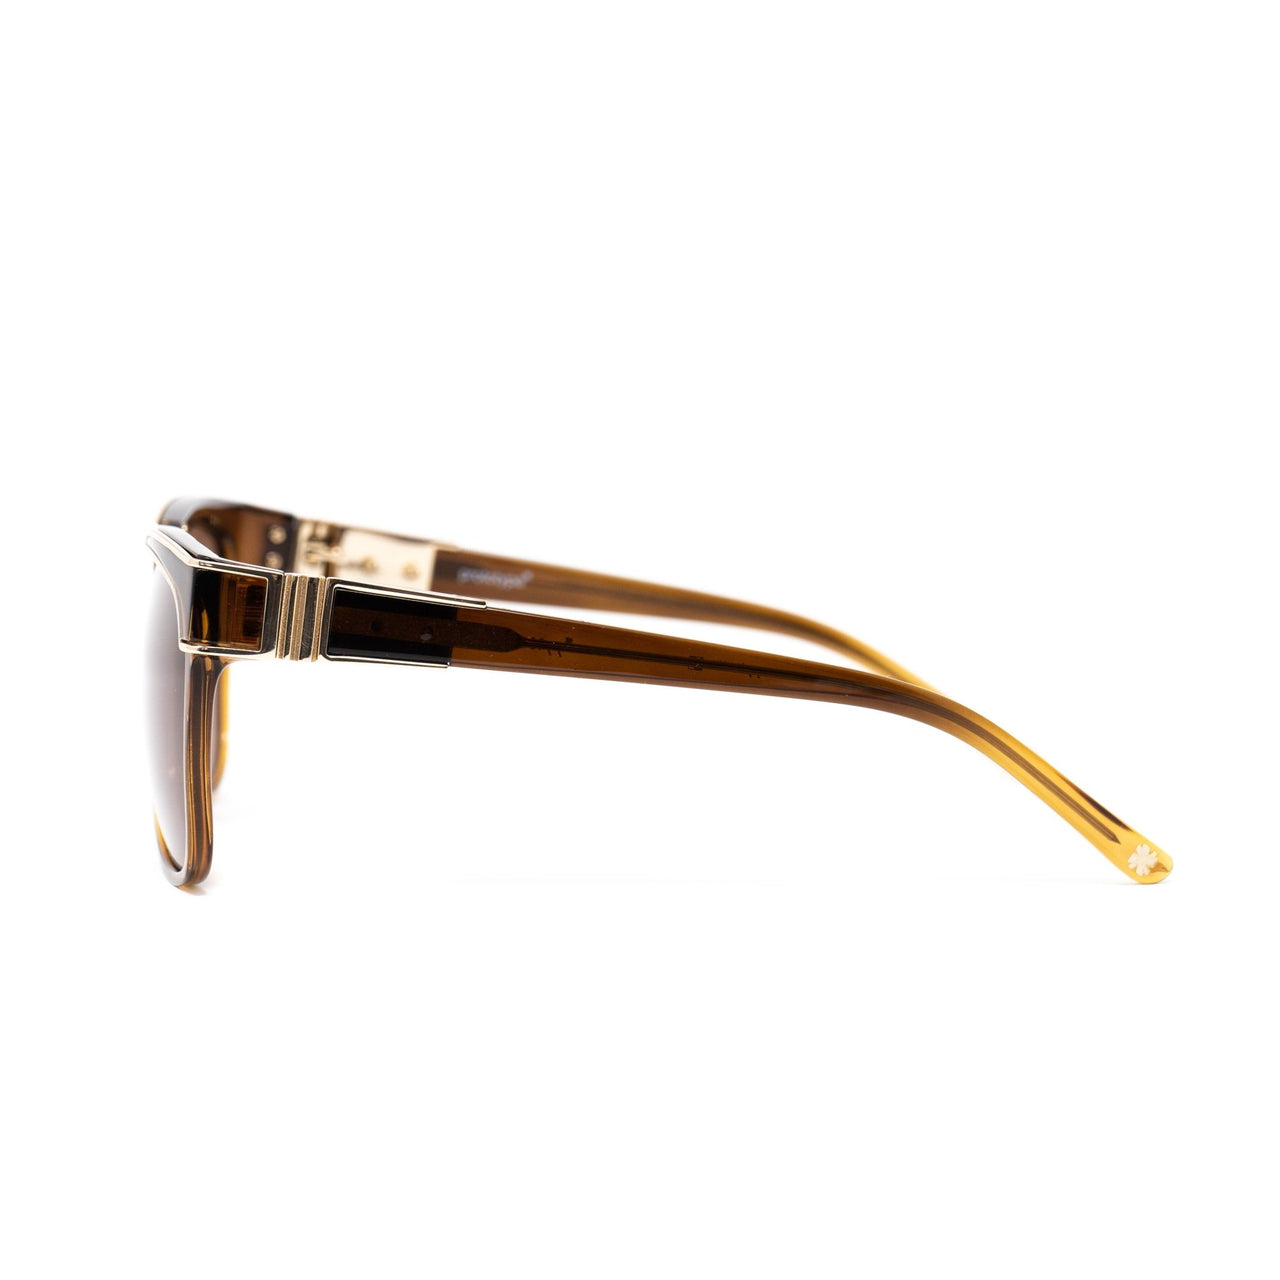 Yohji Yamamoto Unisex Sunglasses Rectangular Brown and Bronze Lenses Category 3 - YY16THORNC2SUN - Watches & Crystals